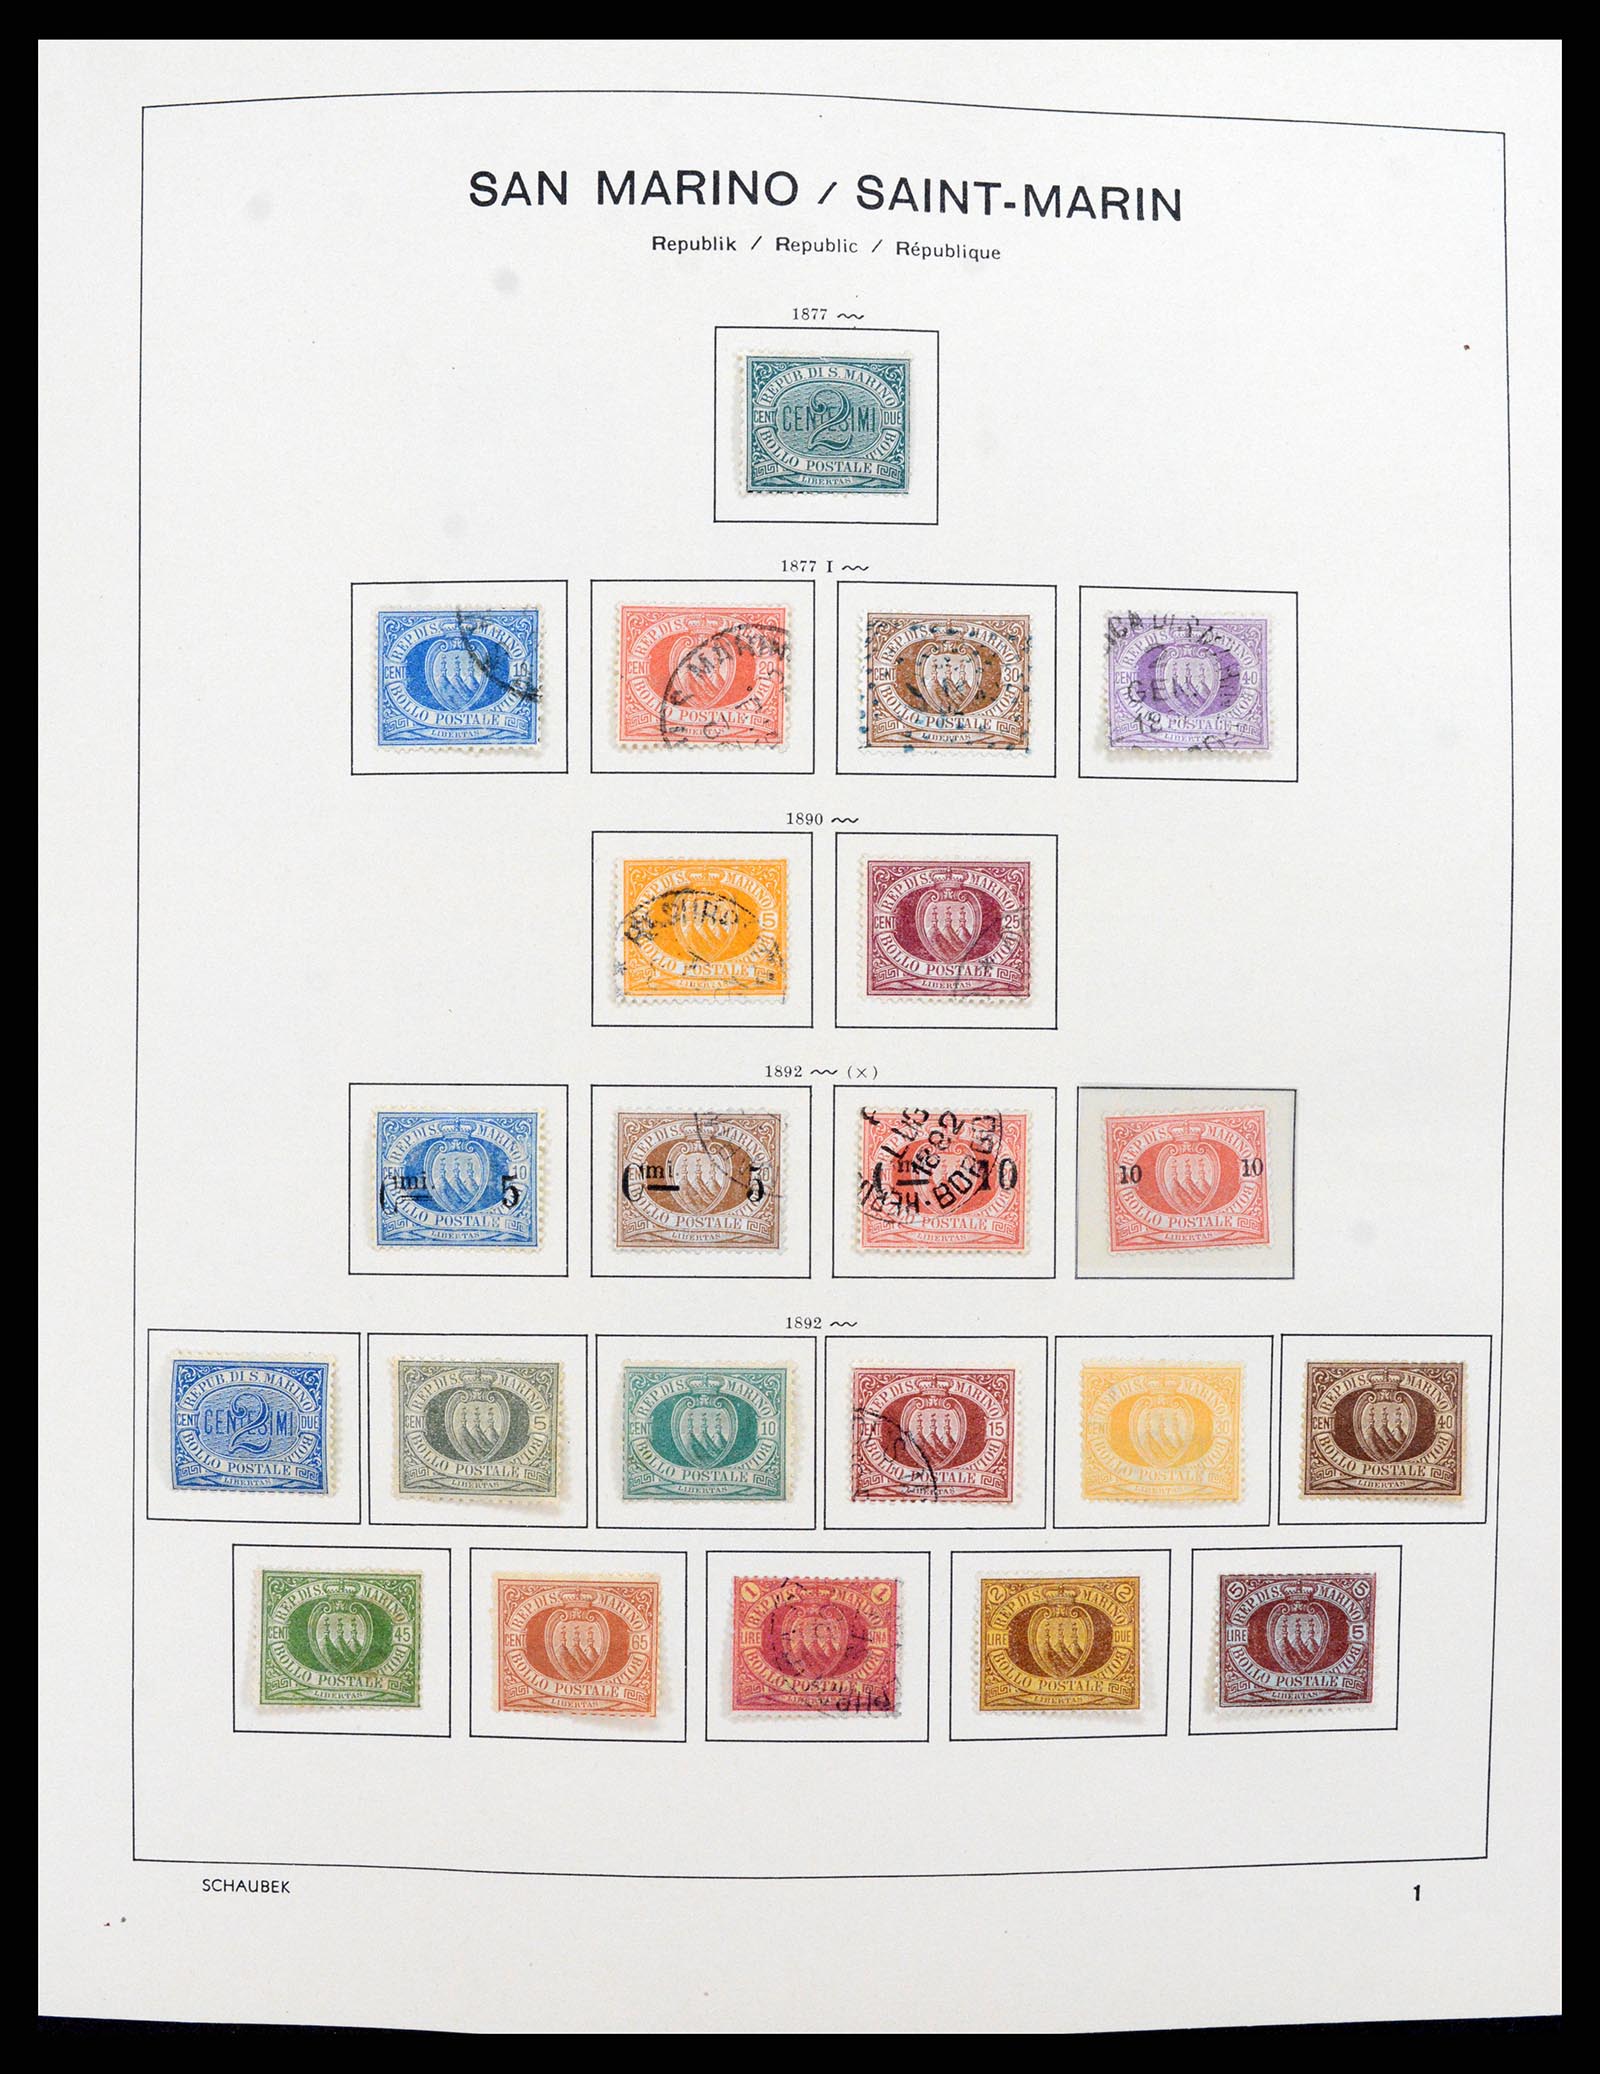 37556 001 - Stamp collection 37556 San Marino 1877-2017.